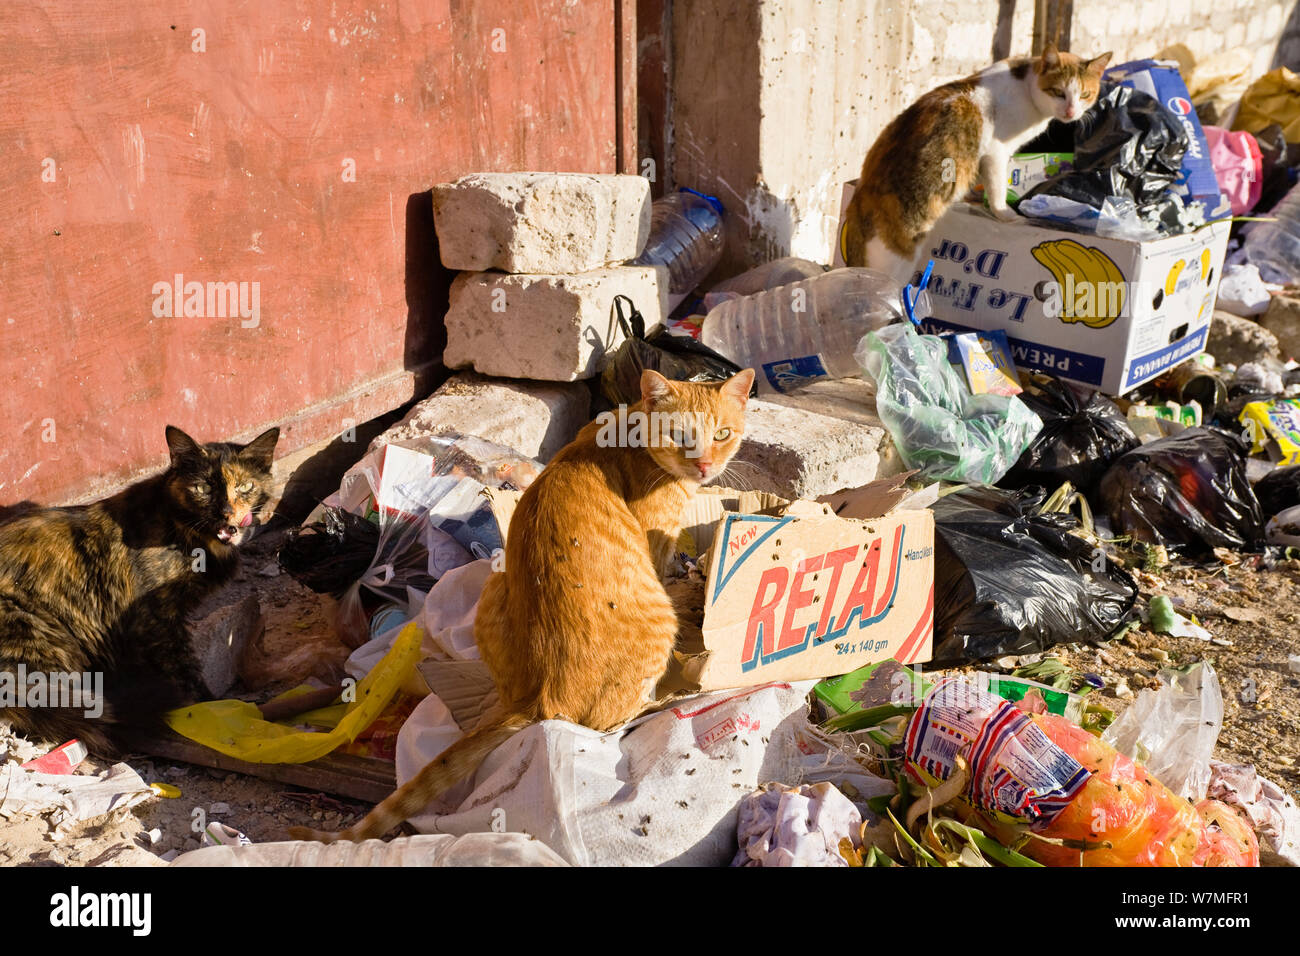 Domestic cats scavenging amongst rubbish, Medina, Old Town, Tripoli, Libya, November 2007 Stock Photo